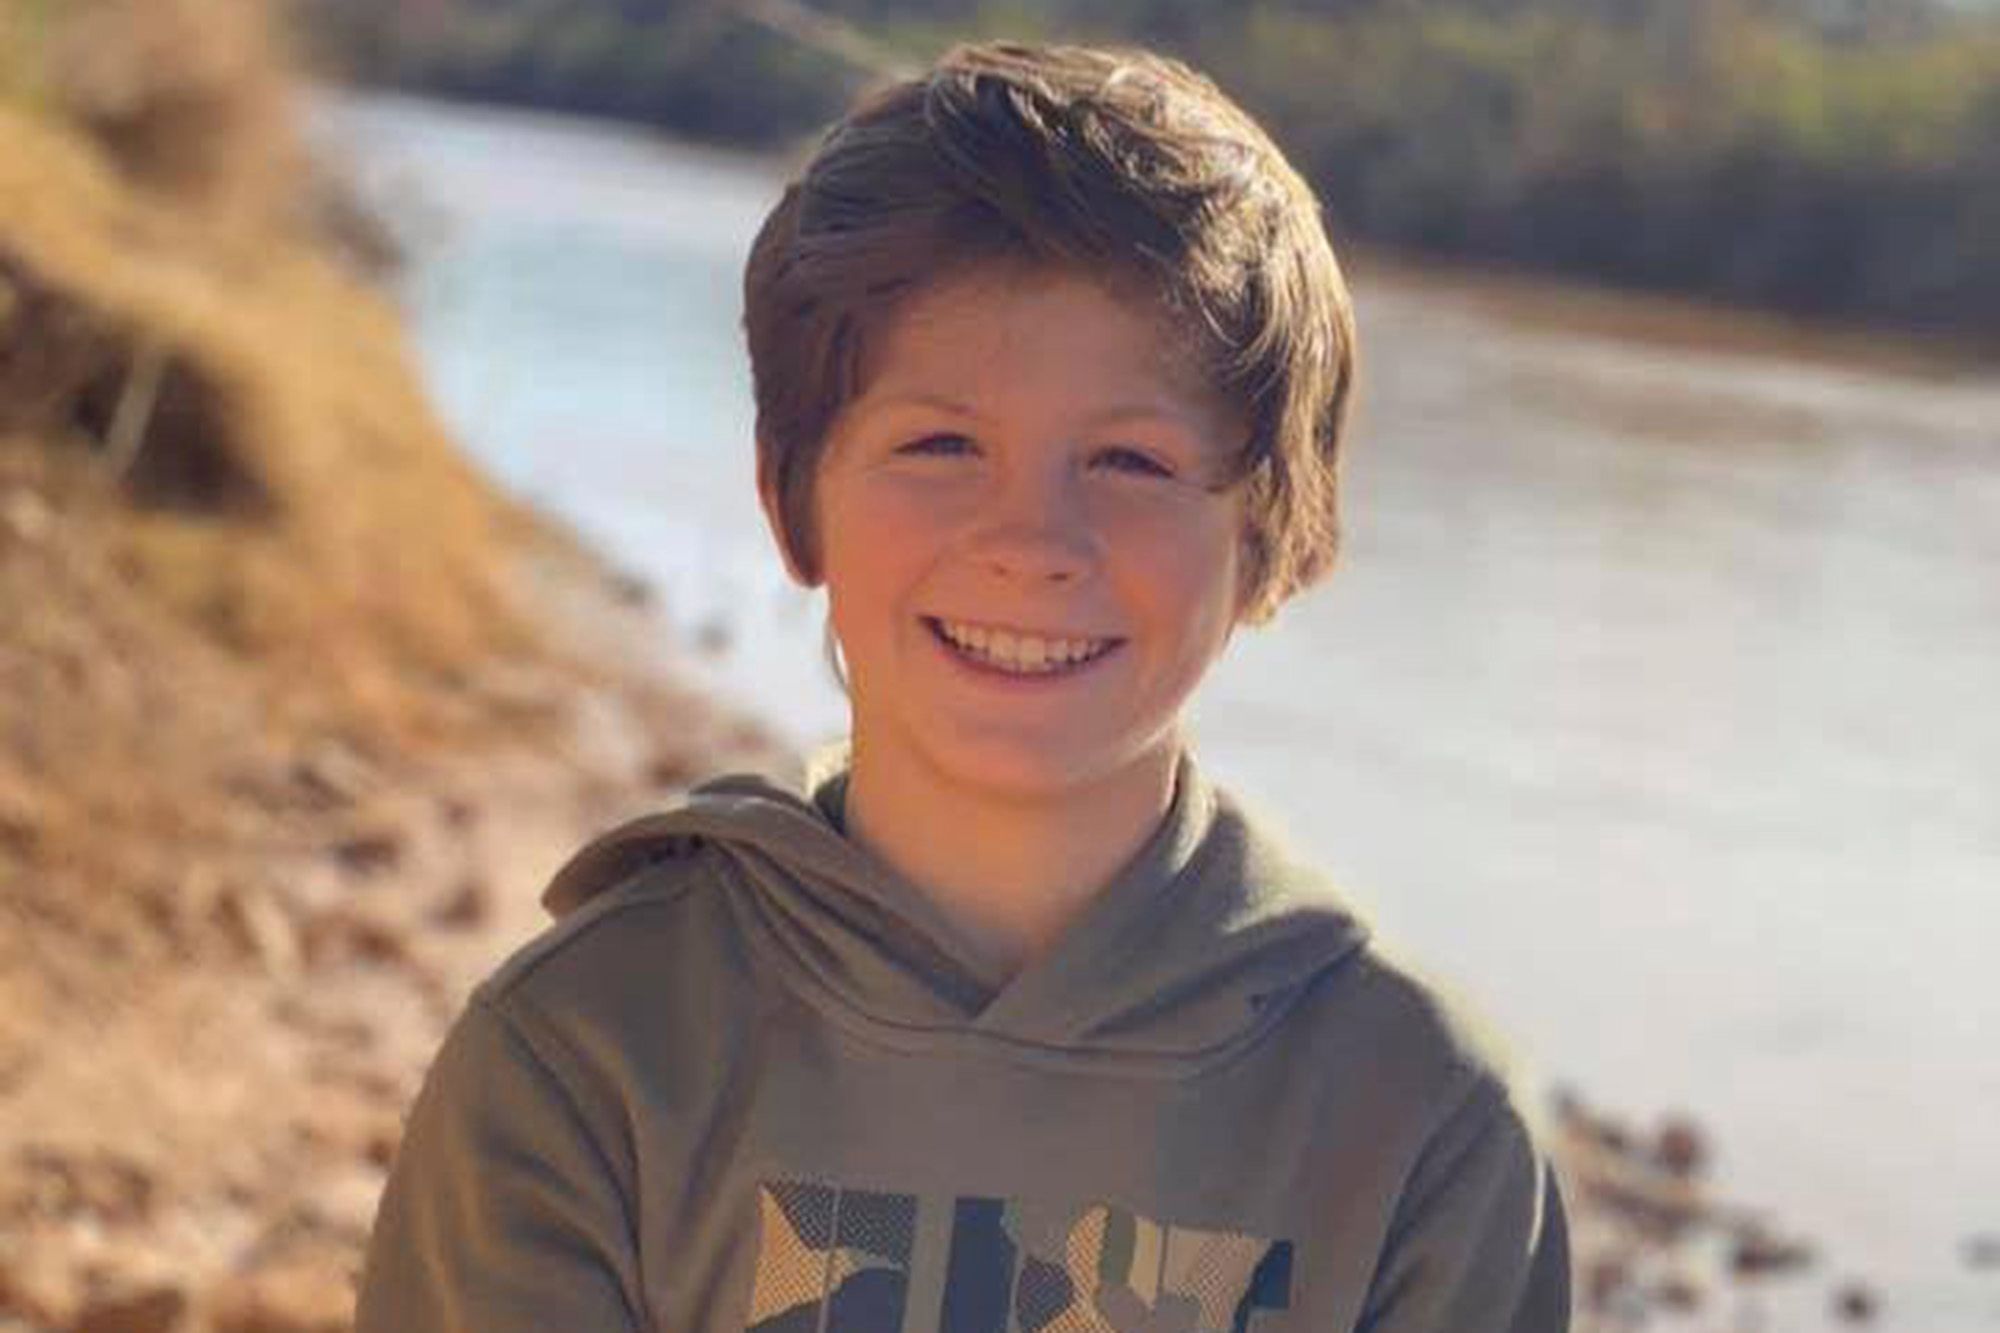 Texas boy, 12, hangs himself after battling depression amid COVID-19